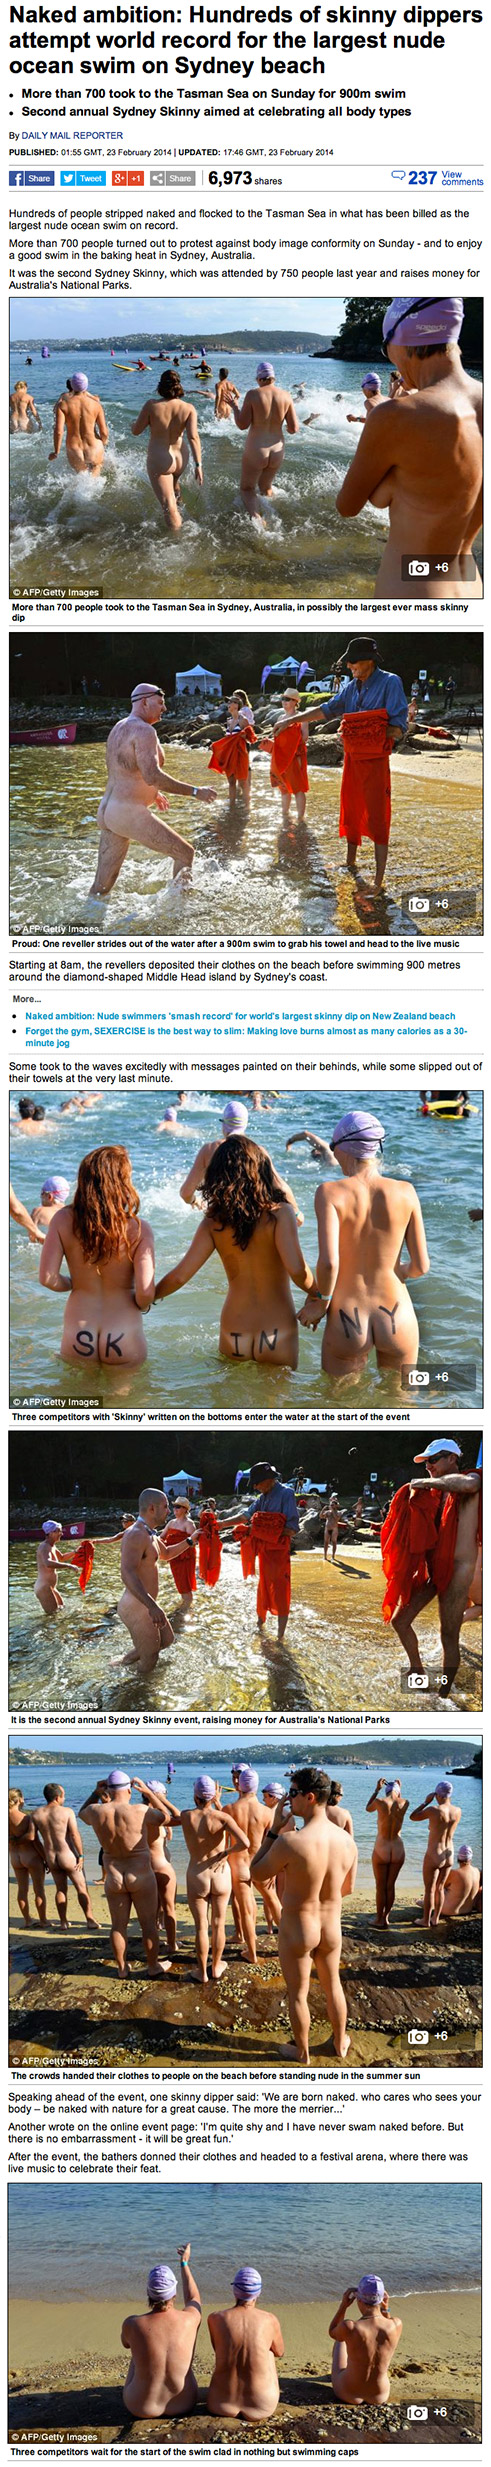 sydney skinny swim daily mail uk article